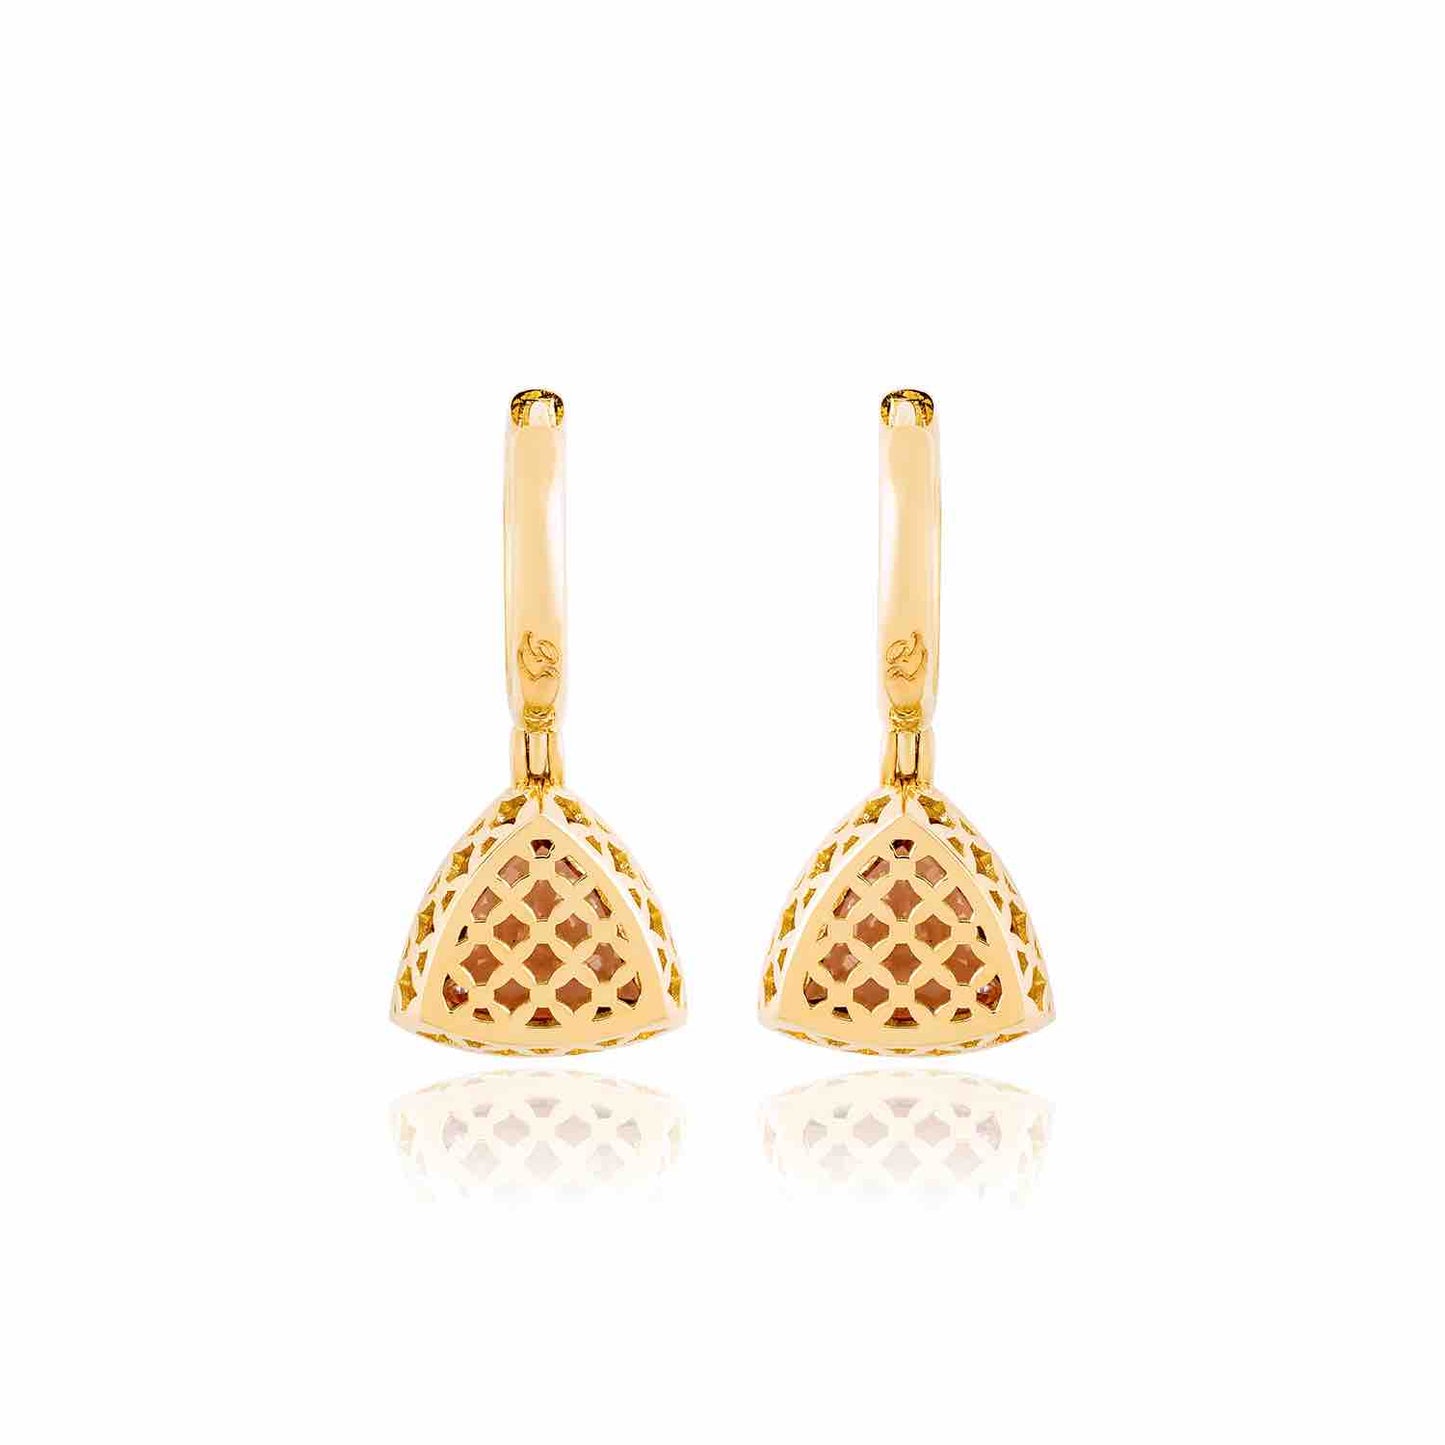 Triangle of Life, Gold Earrings, Diamond Earrings, 14K Gold Earrings, Gold Jewelry, Tourmaline Earrings, Gemstone Earrings